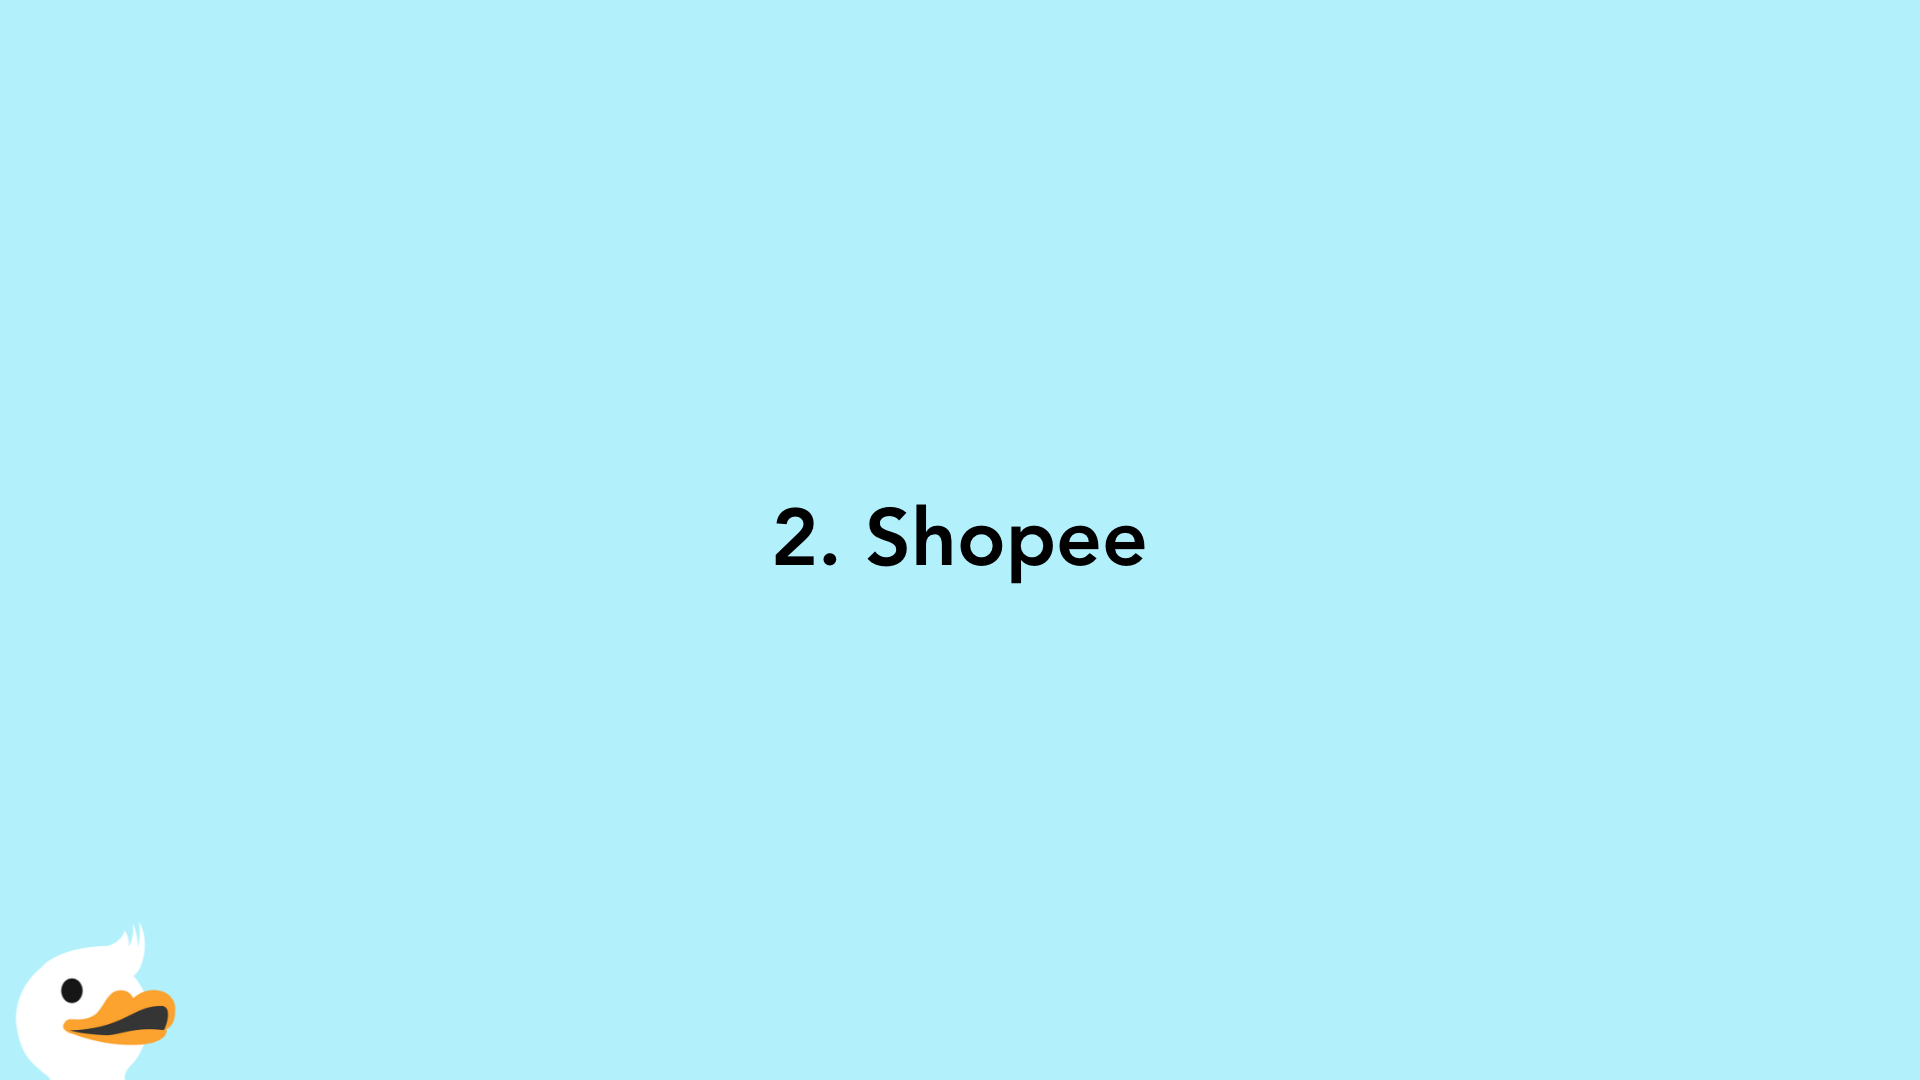 2. Shopee